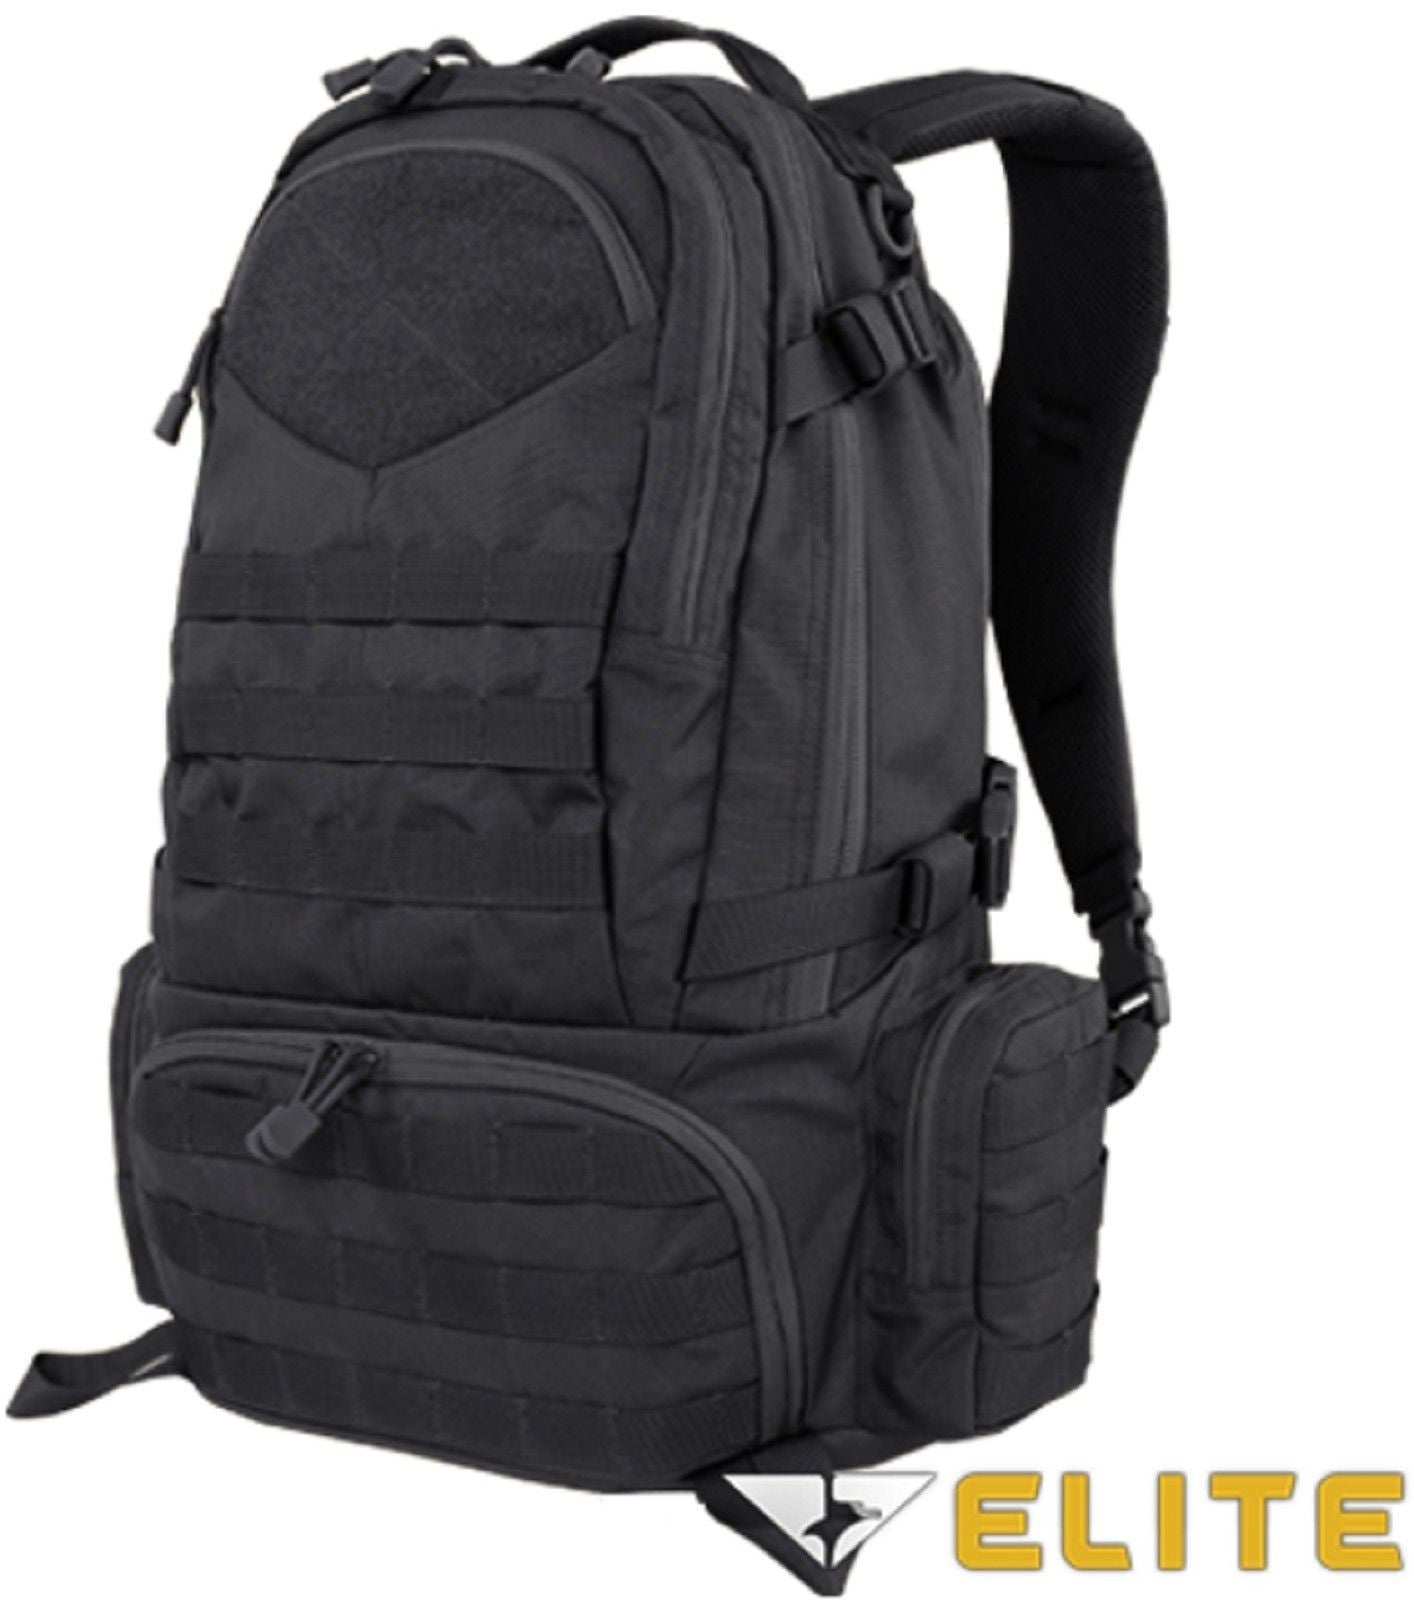 Condor Elite Titan Assault Pack Bag- Mil-Spec Outdoor Tactical Pack Ba ...